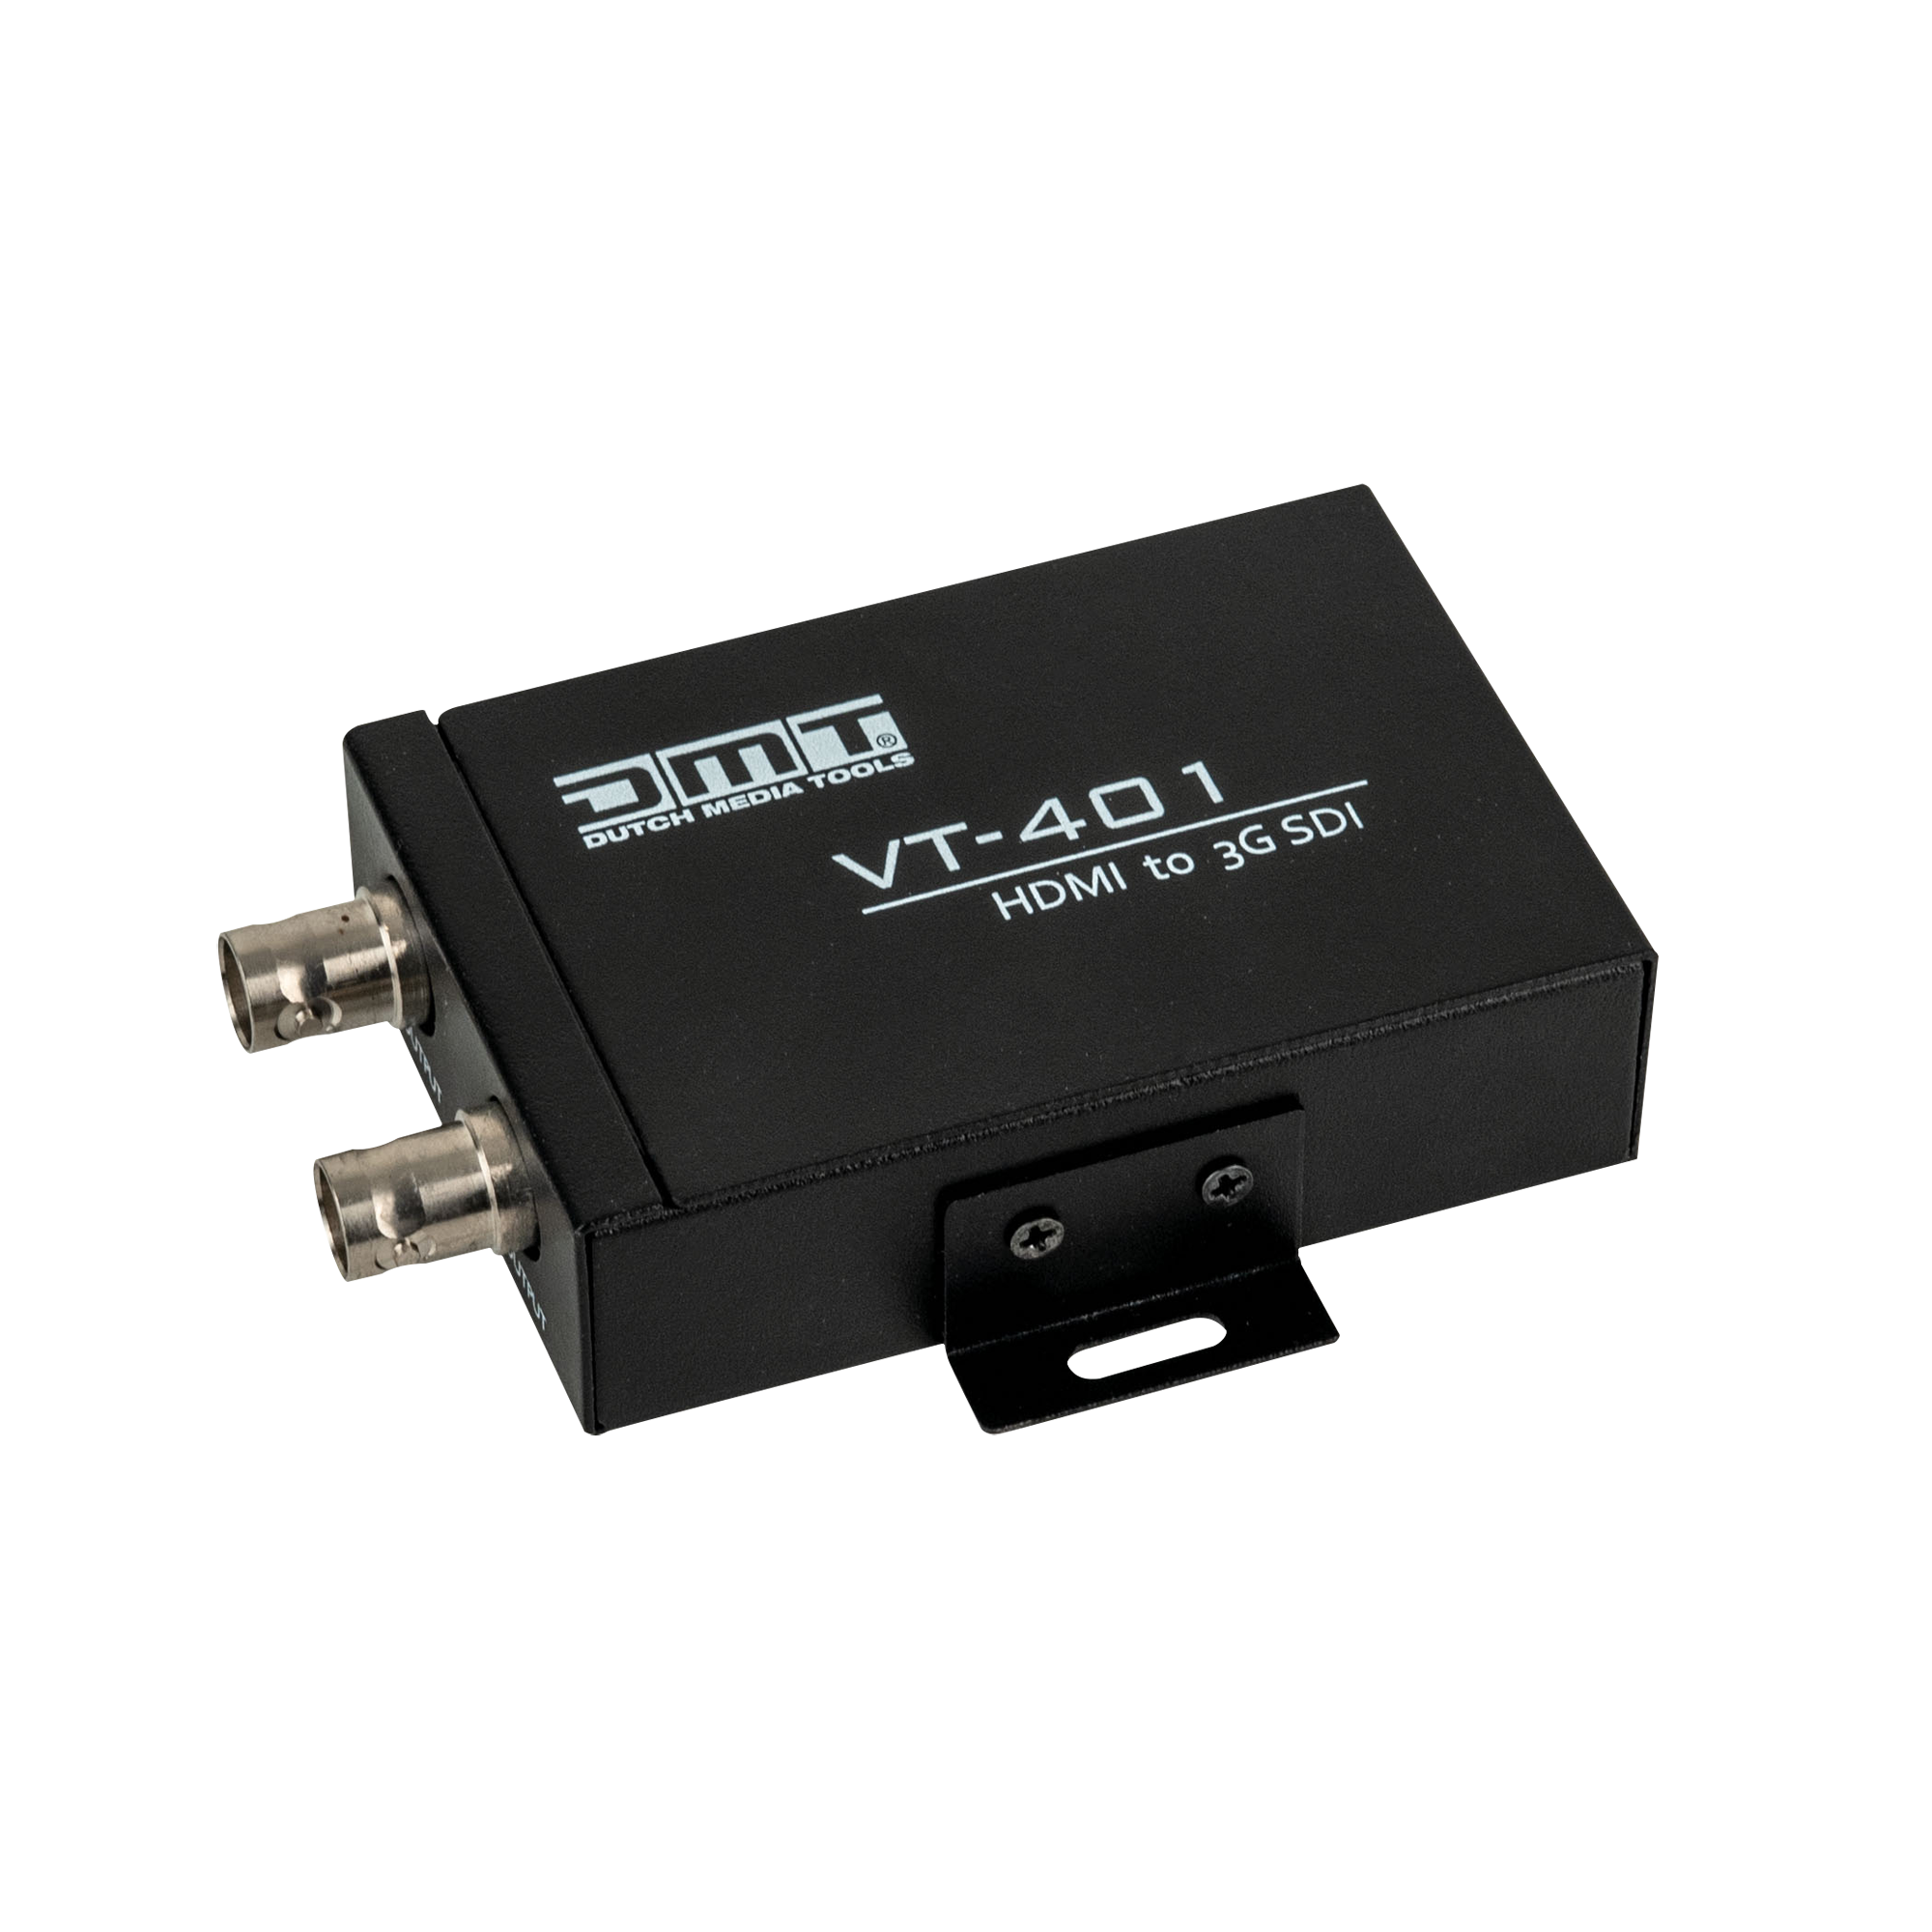 VT 401 - HDMI to 3G-SDI converter - Onlinediscowinkel.nl